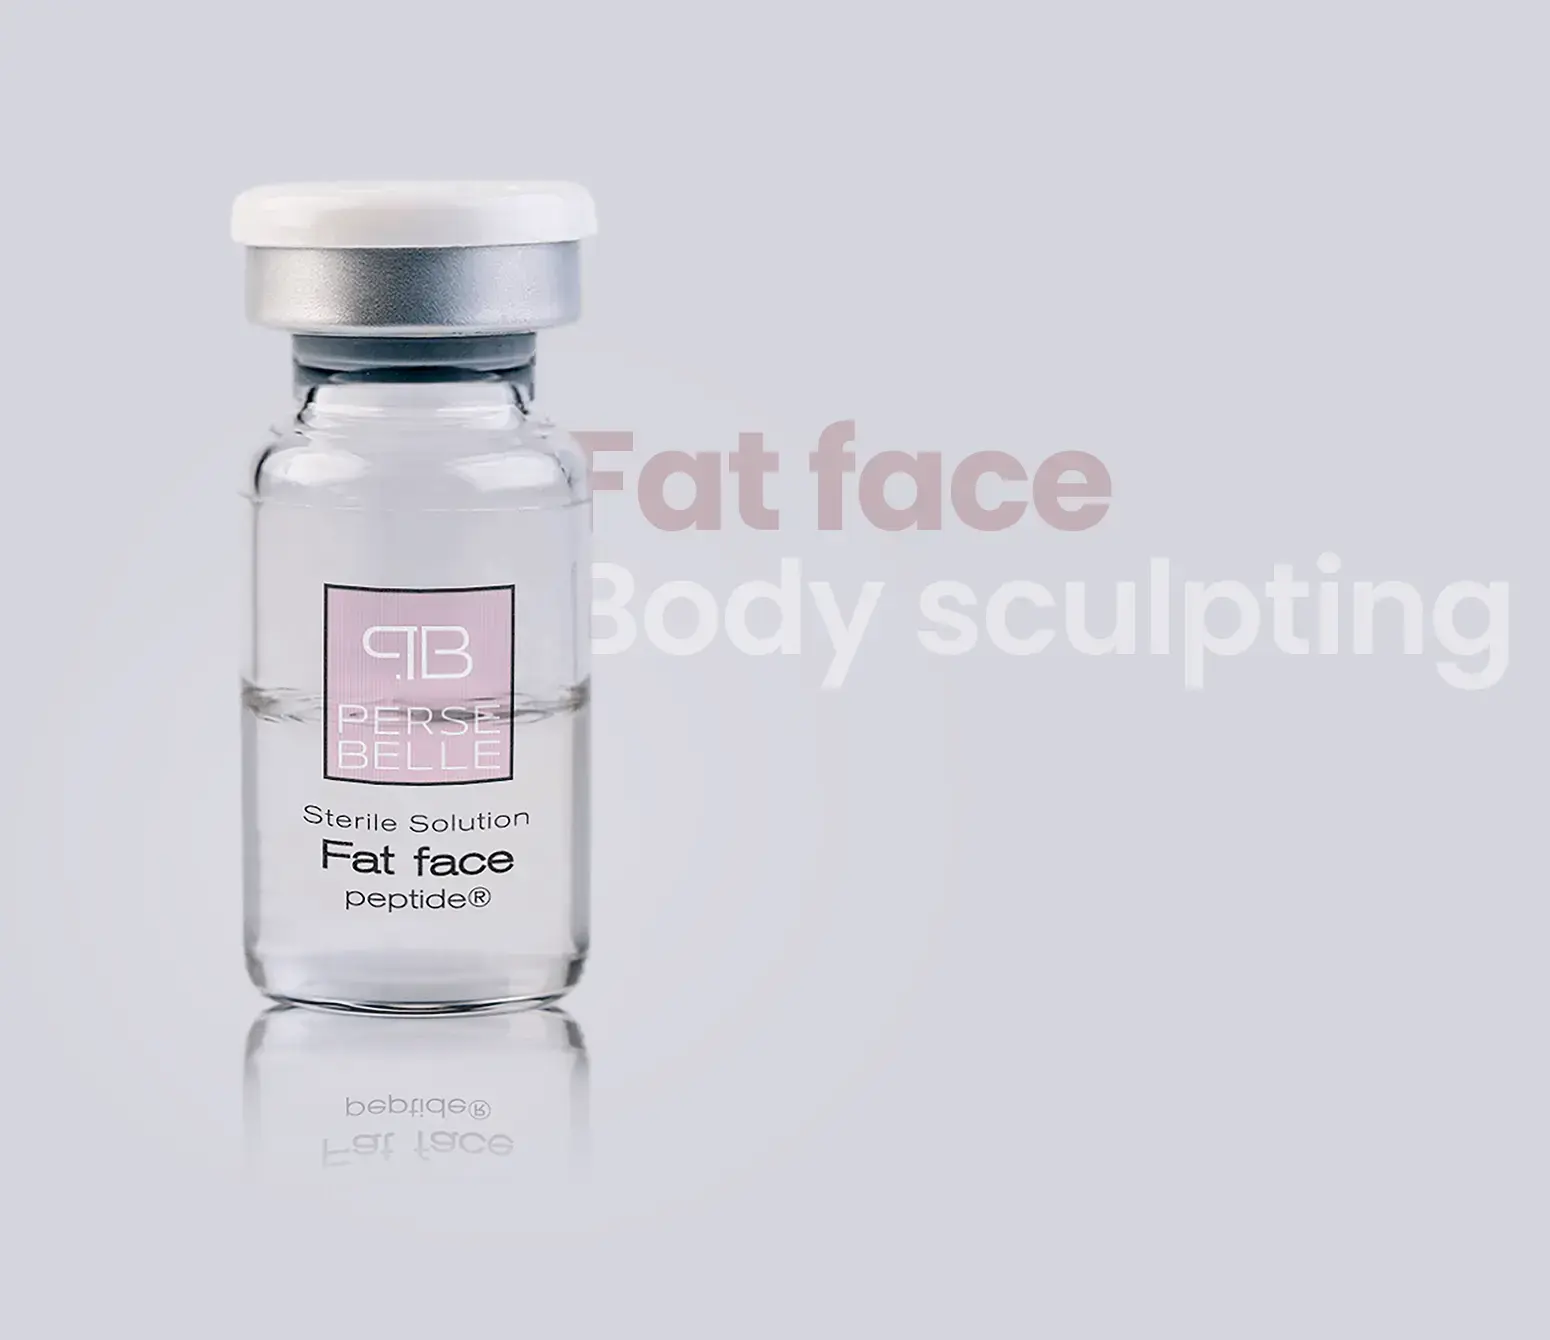 Fat face Body Sculpting- Persebelle